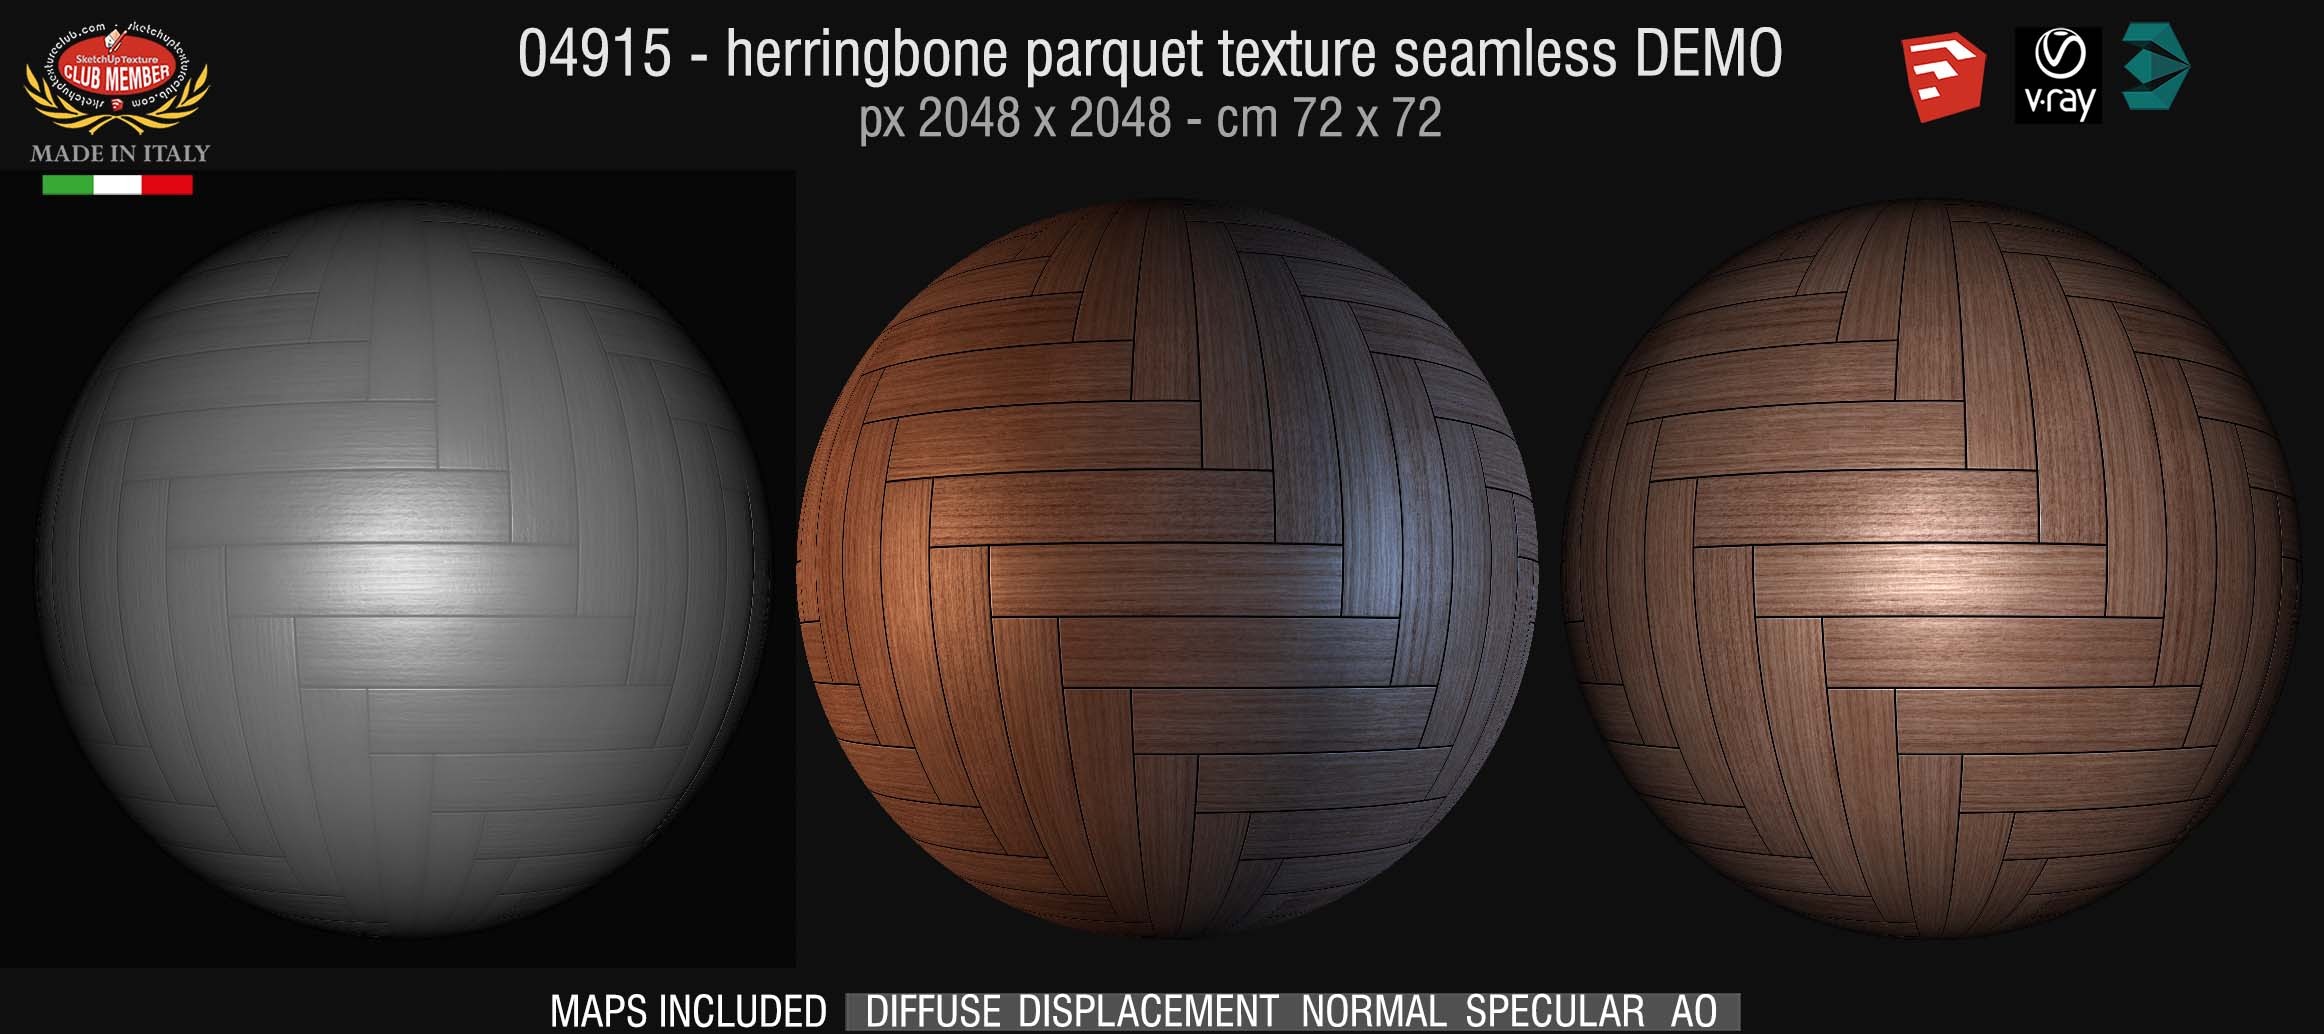 04915 HR Herringbone parquet texture seamless + maps DEMO